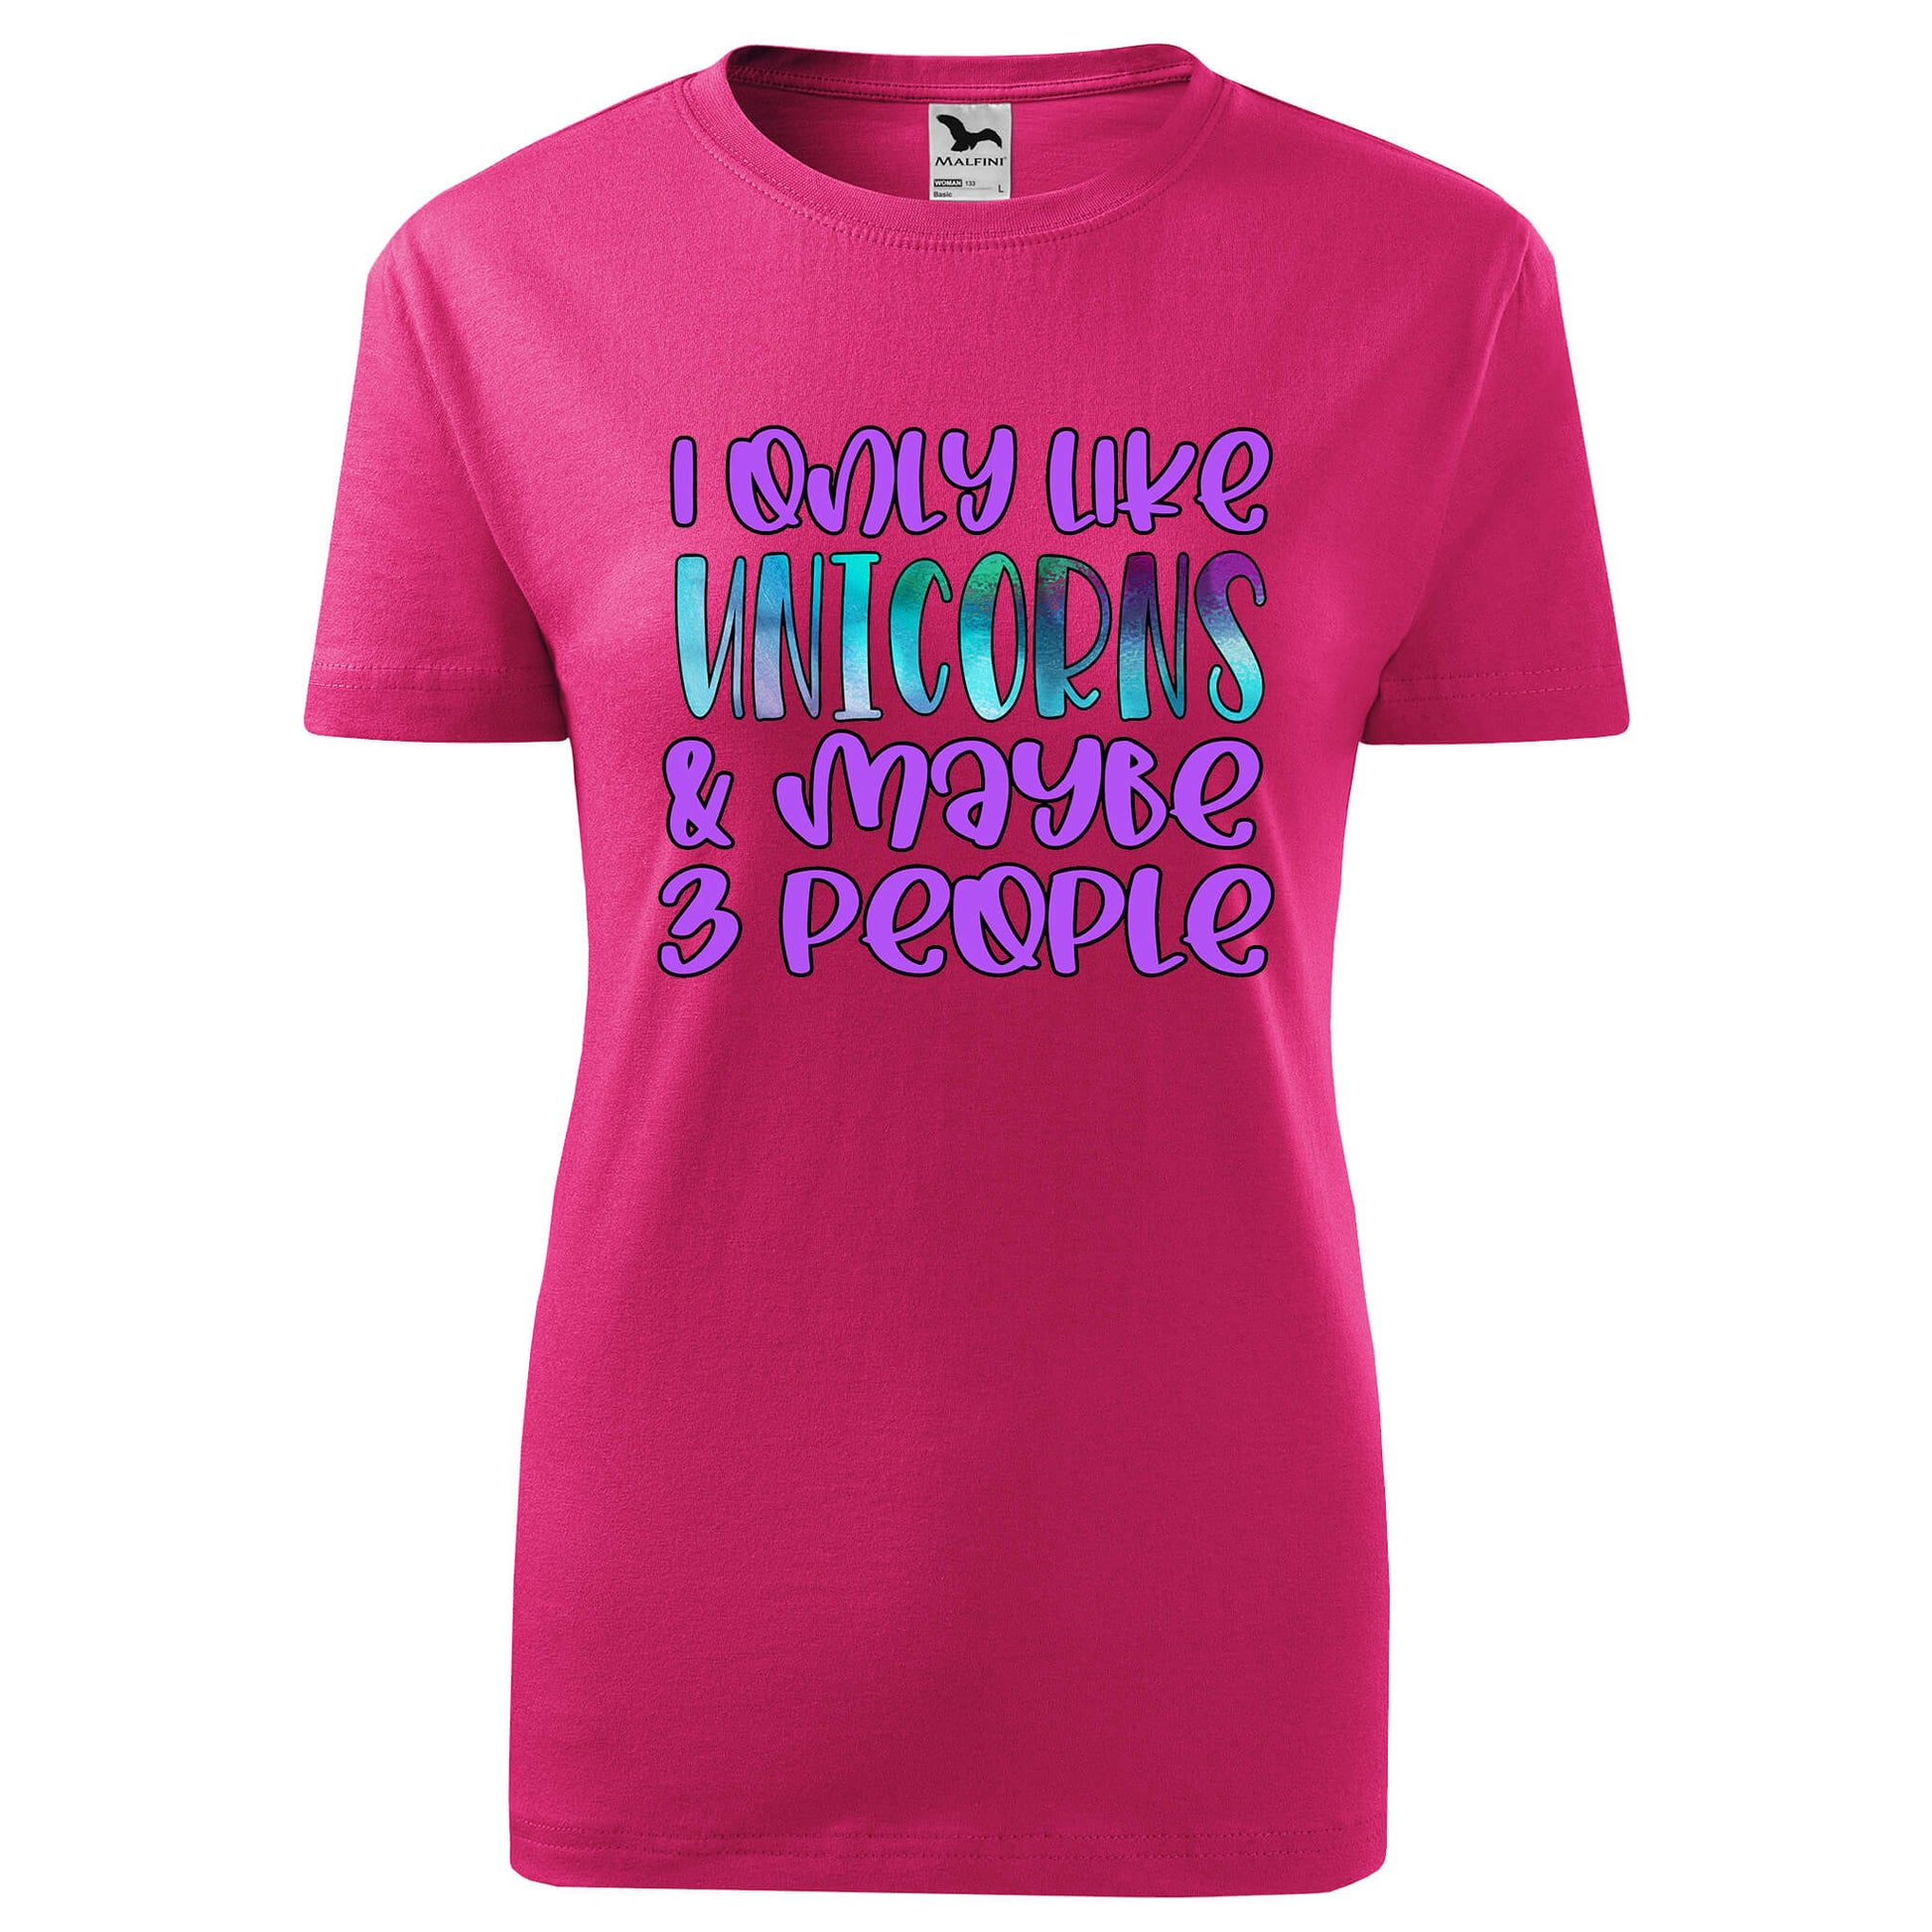 I only like unicorns and maybe 3 people t-shirt - rvdesignprint